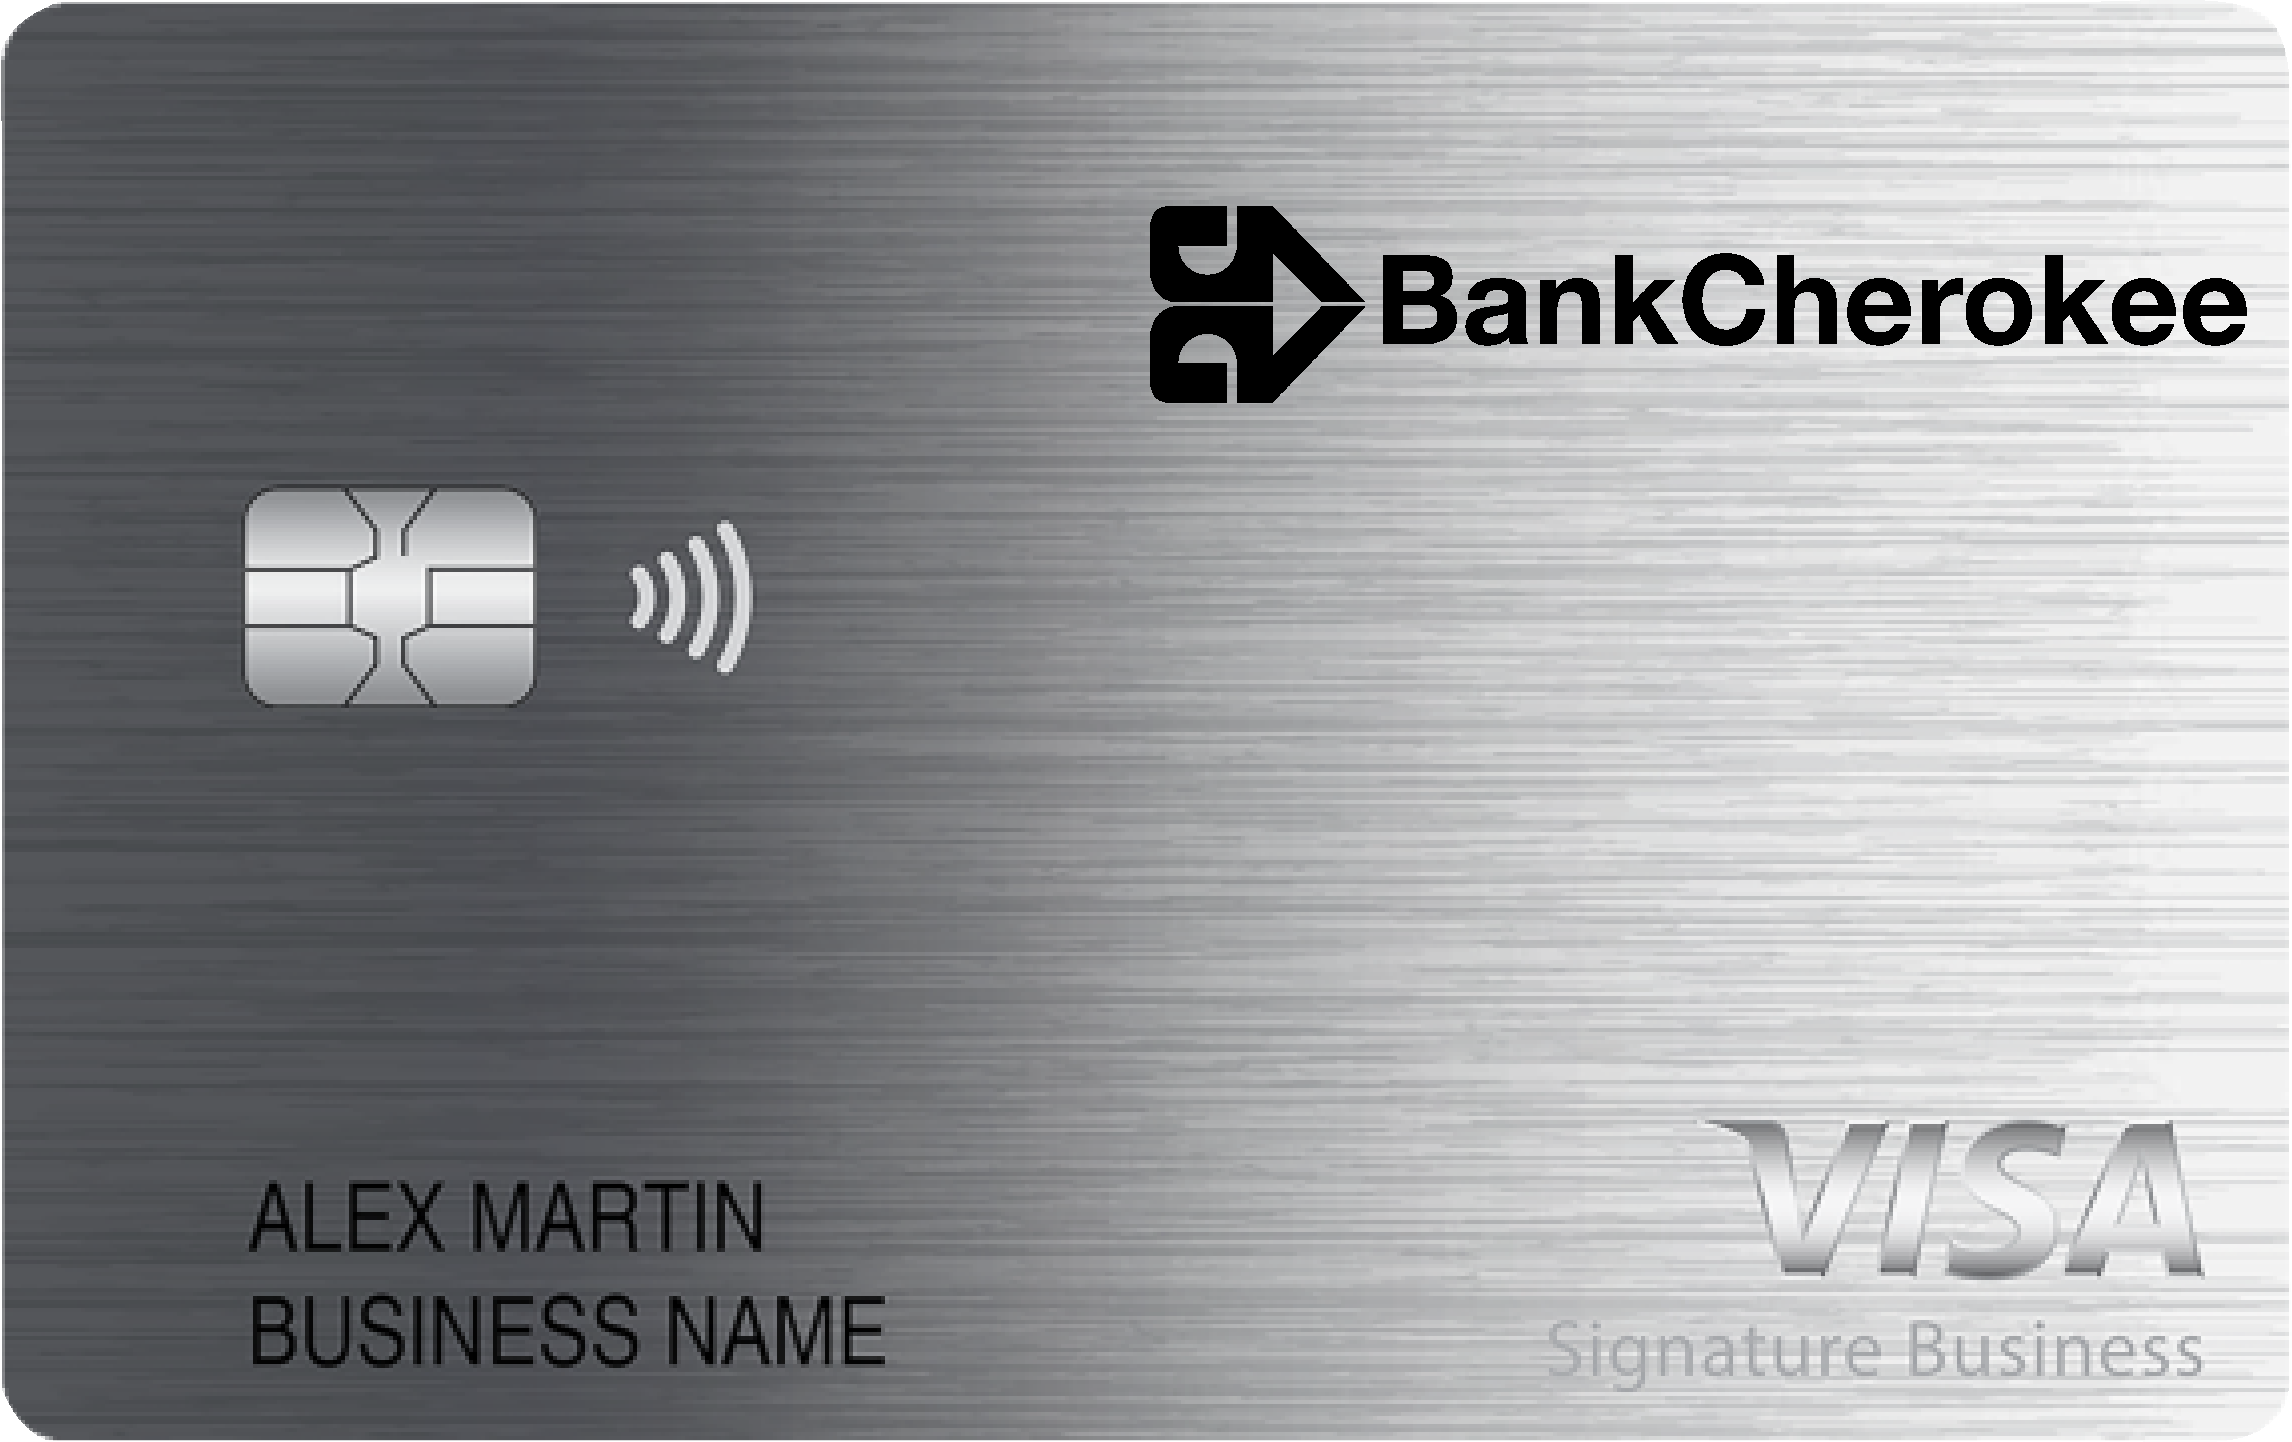 BankCherokee Smart Business Rewards Card